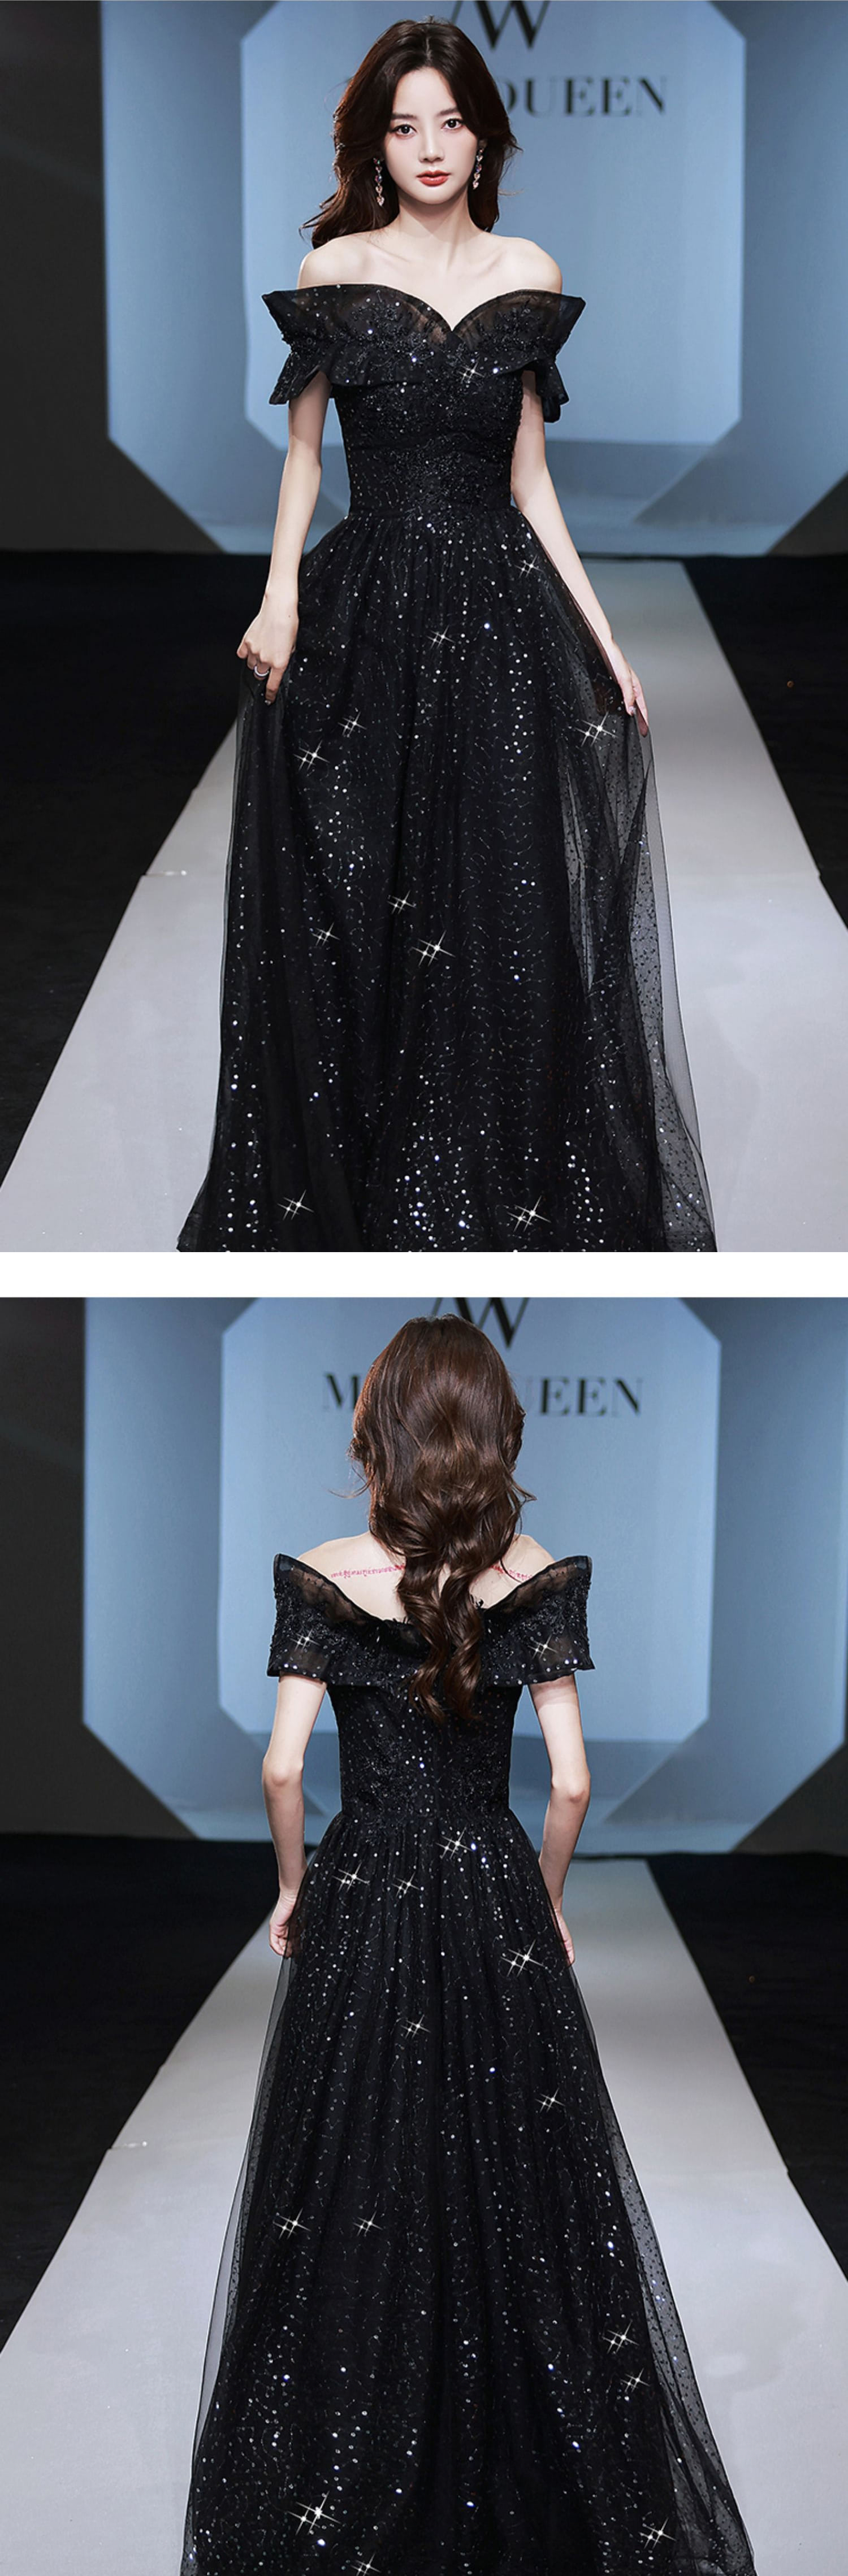 Fashion-Black-Off-Shoulder-Sequin-Mesh-Evening-Prom-Party-Dress14